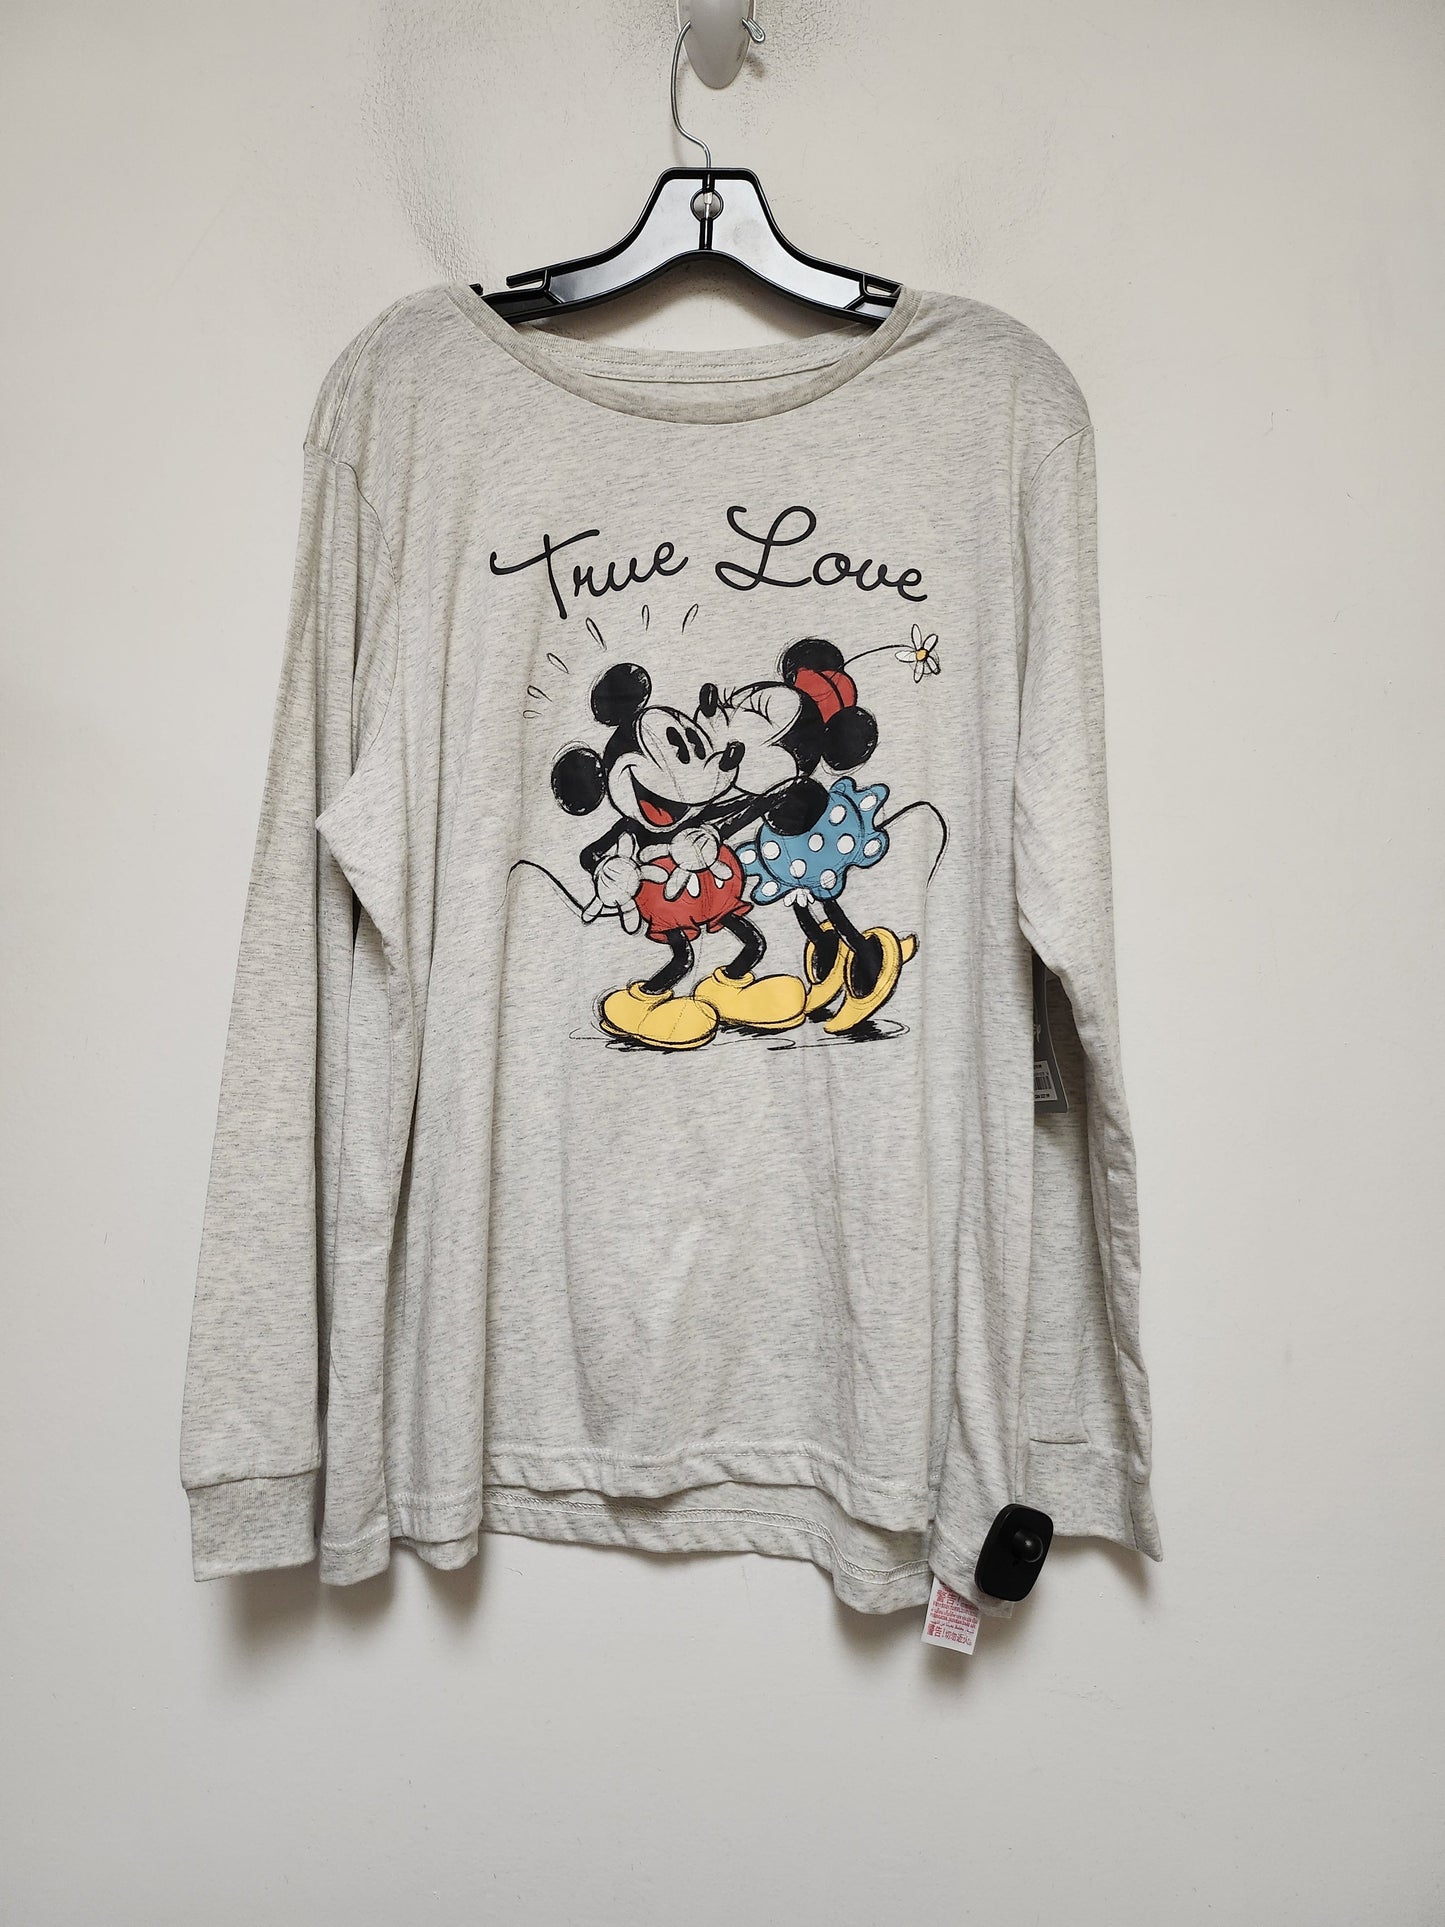 Grey Top Long Sleeve Walt Disney, Size 2x